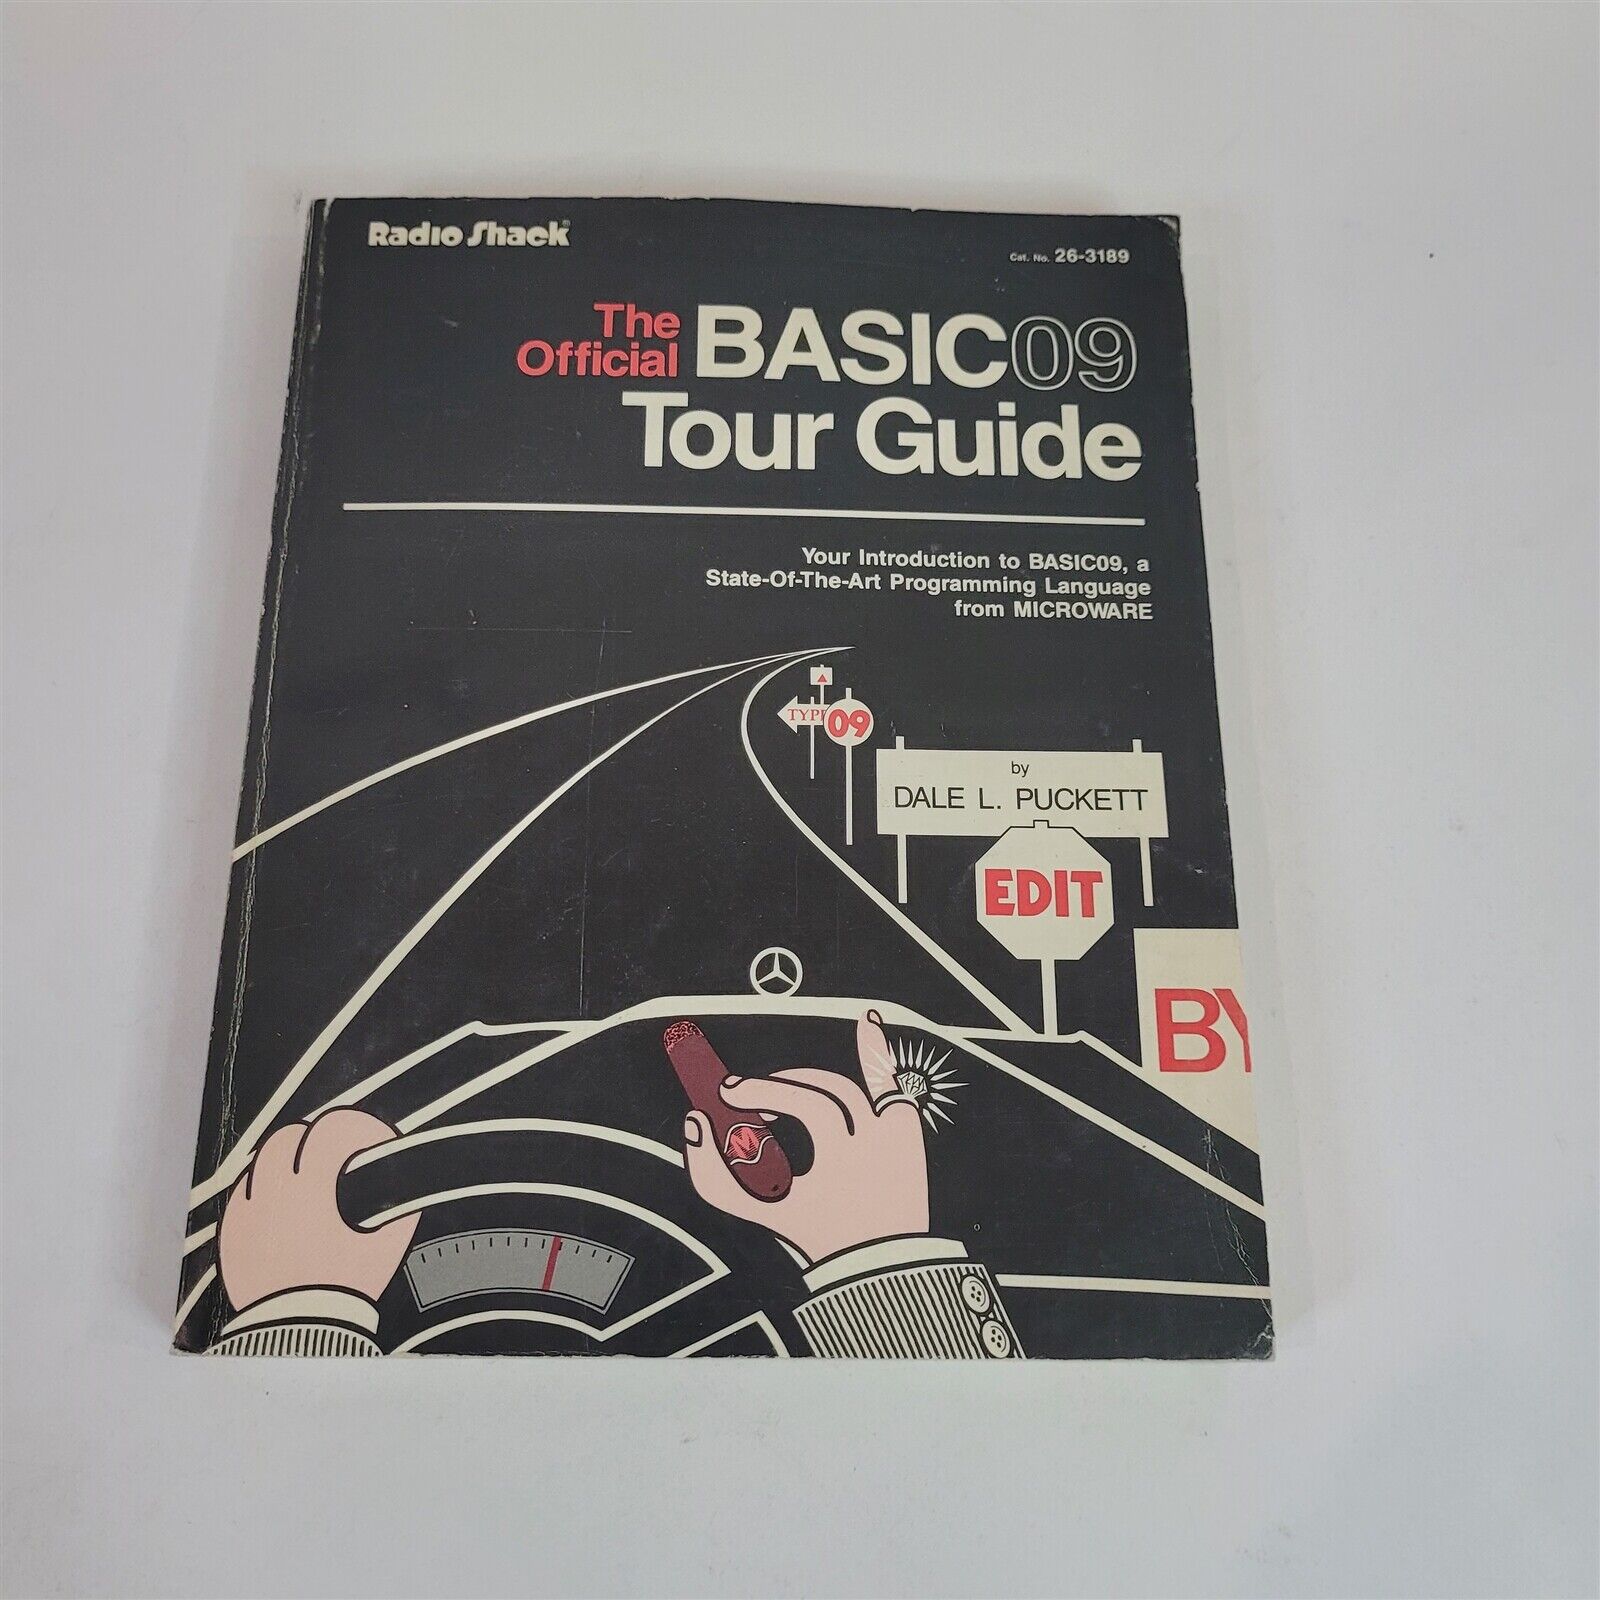 Vintage 1985 Original Radio Shack The Official BASIC09 Tour Guide 26-3189 BASIC